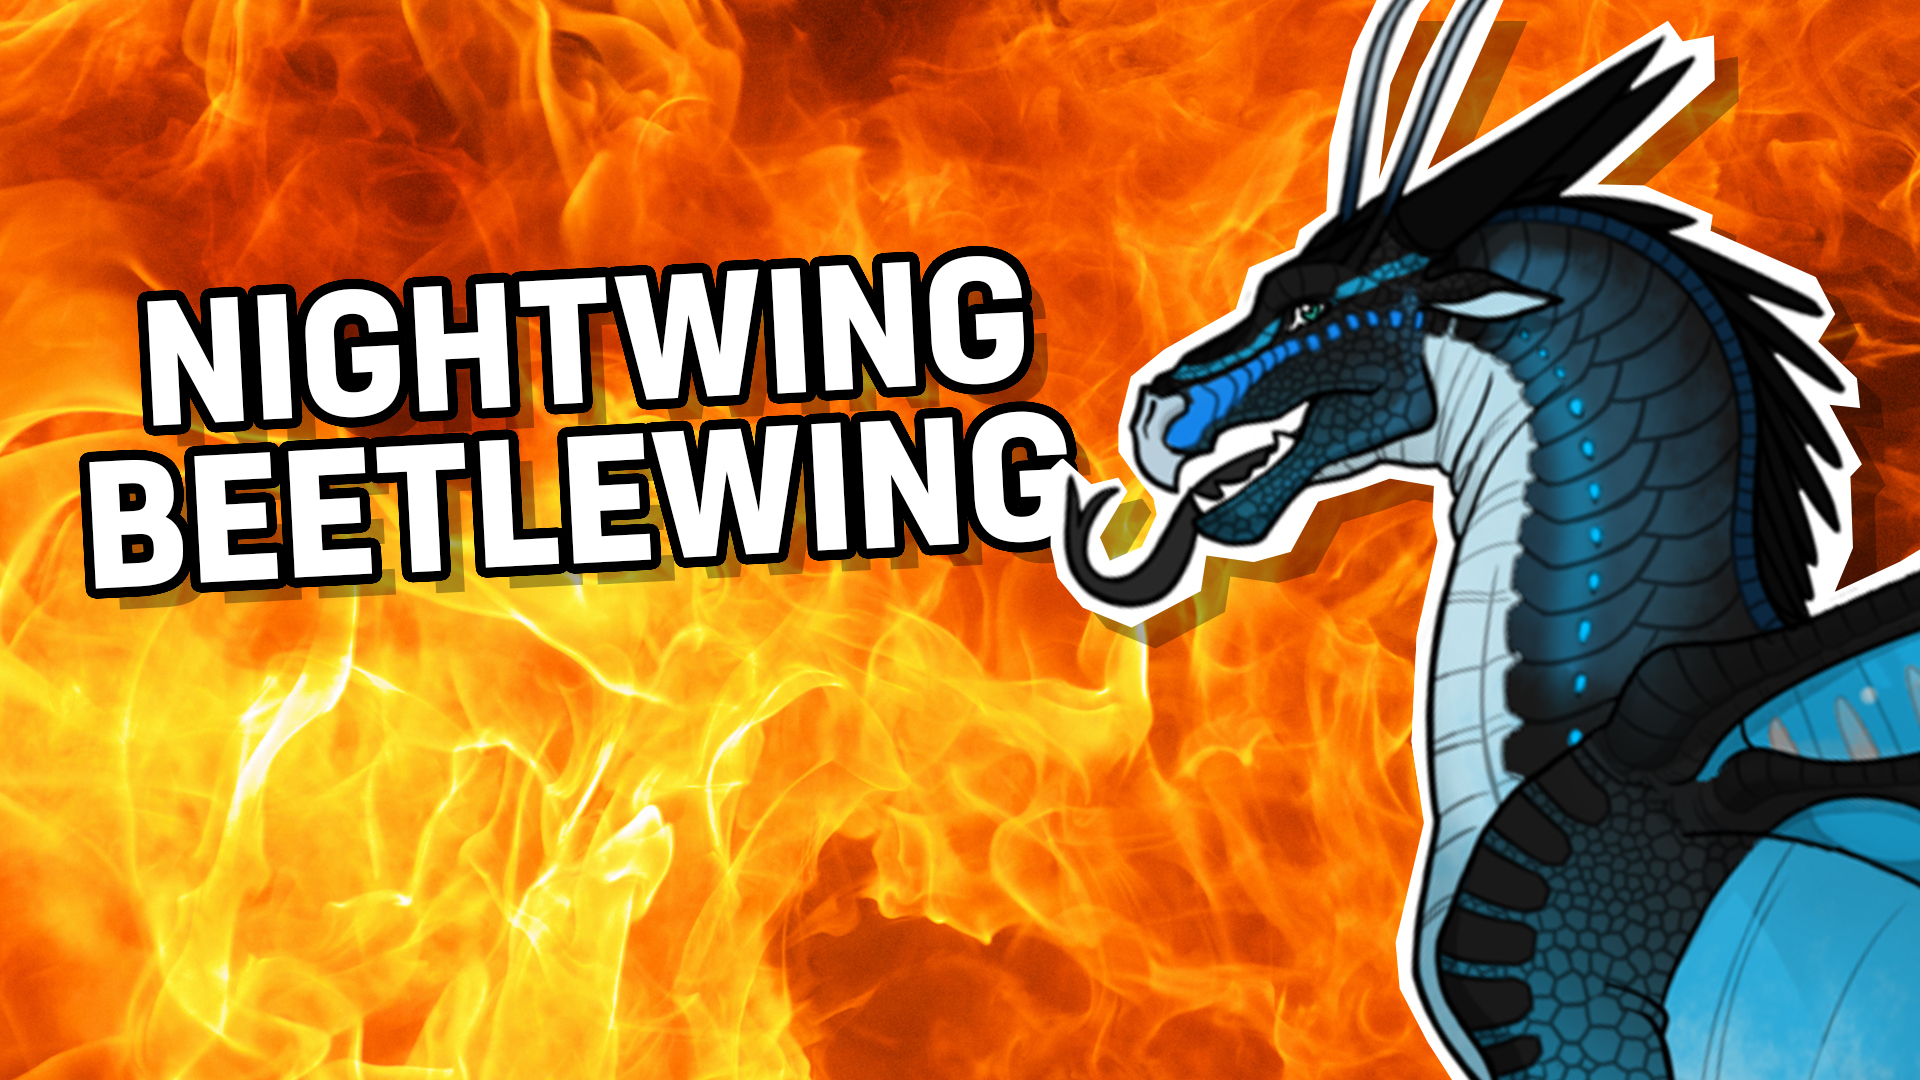 A Nightwing-Beetlewing